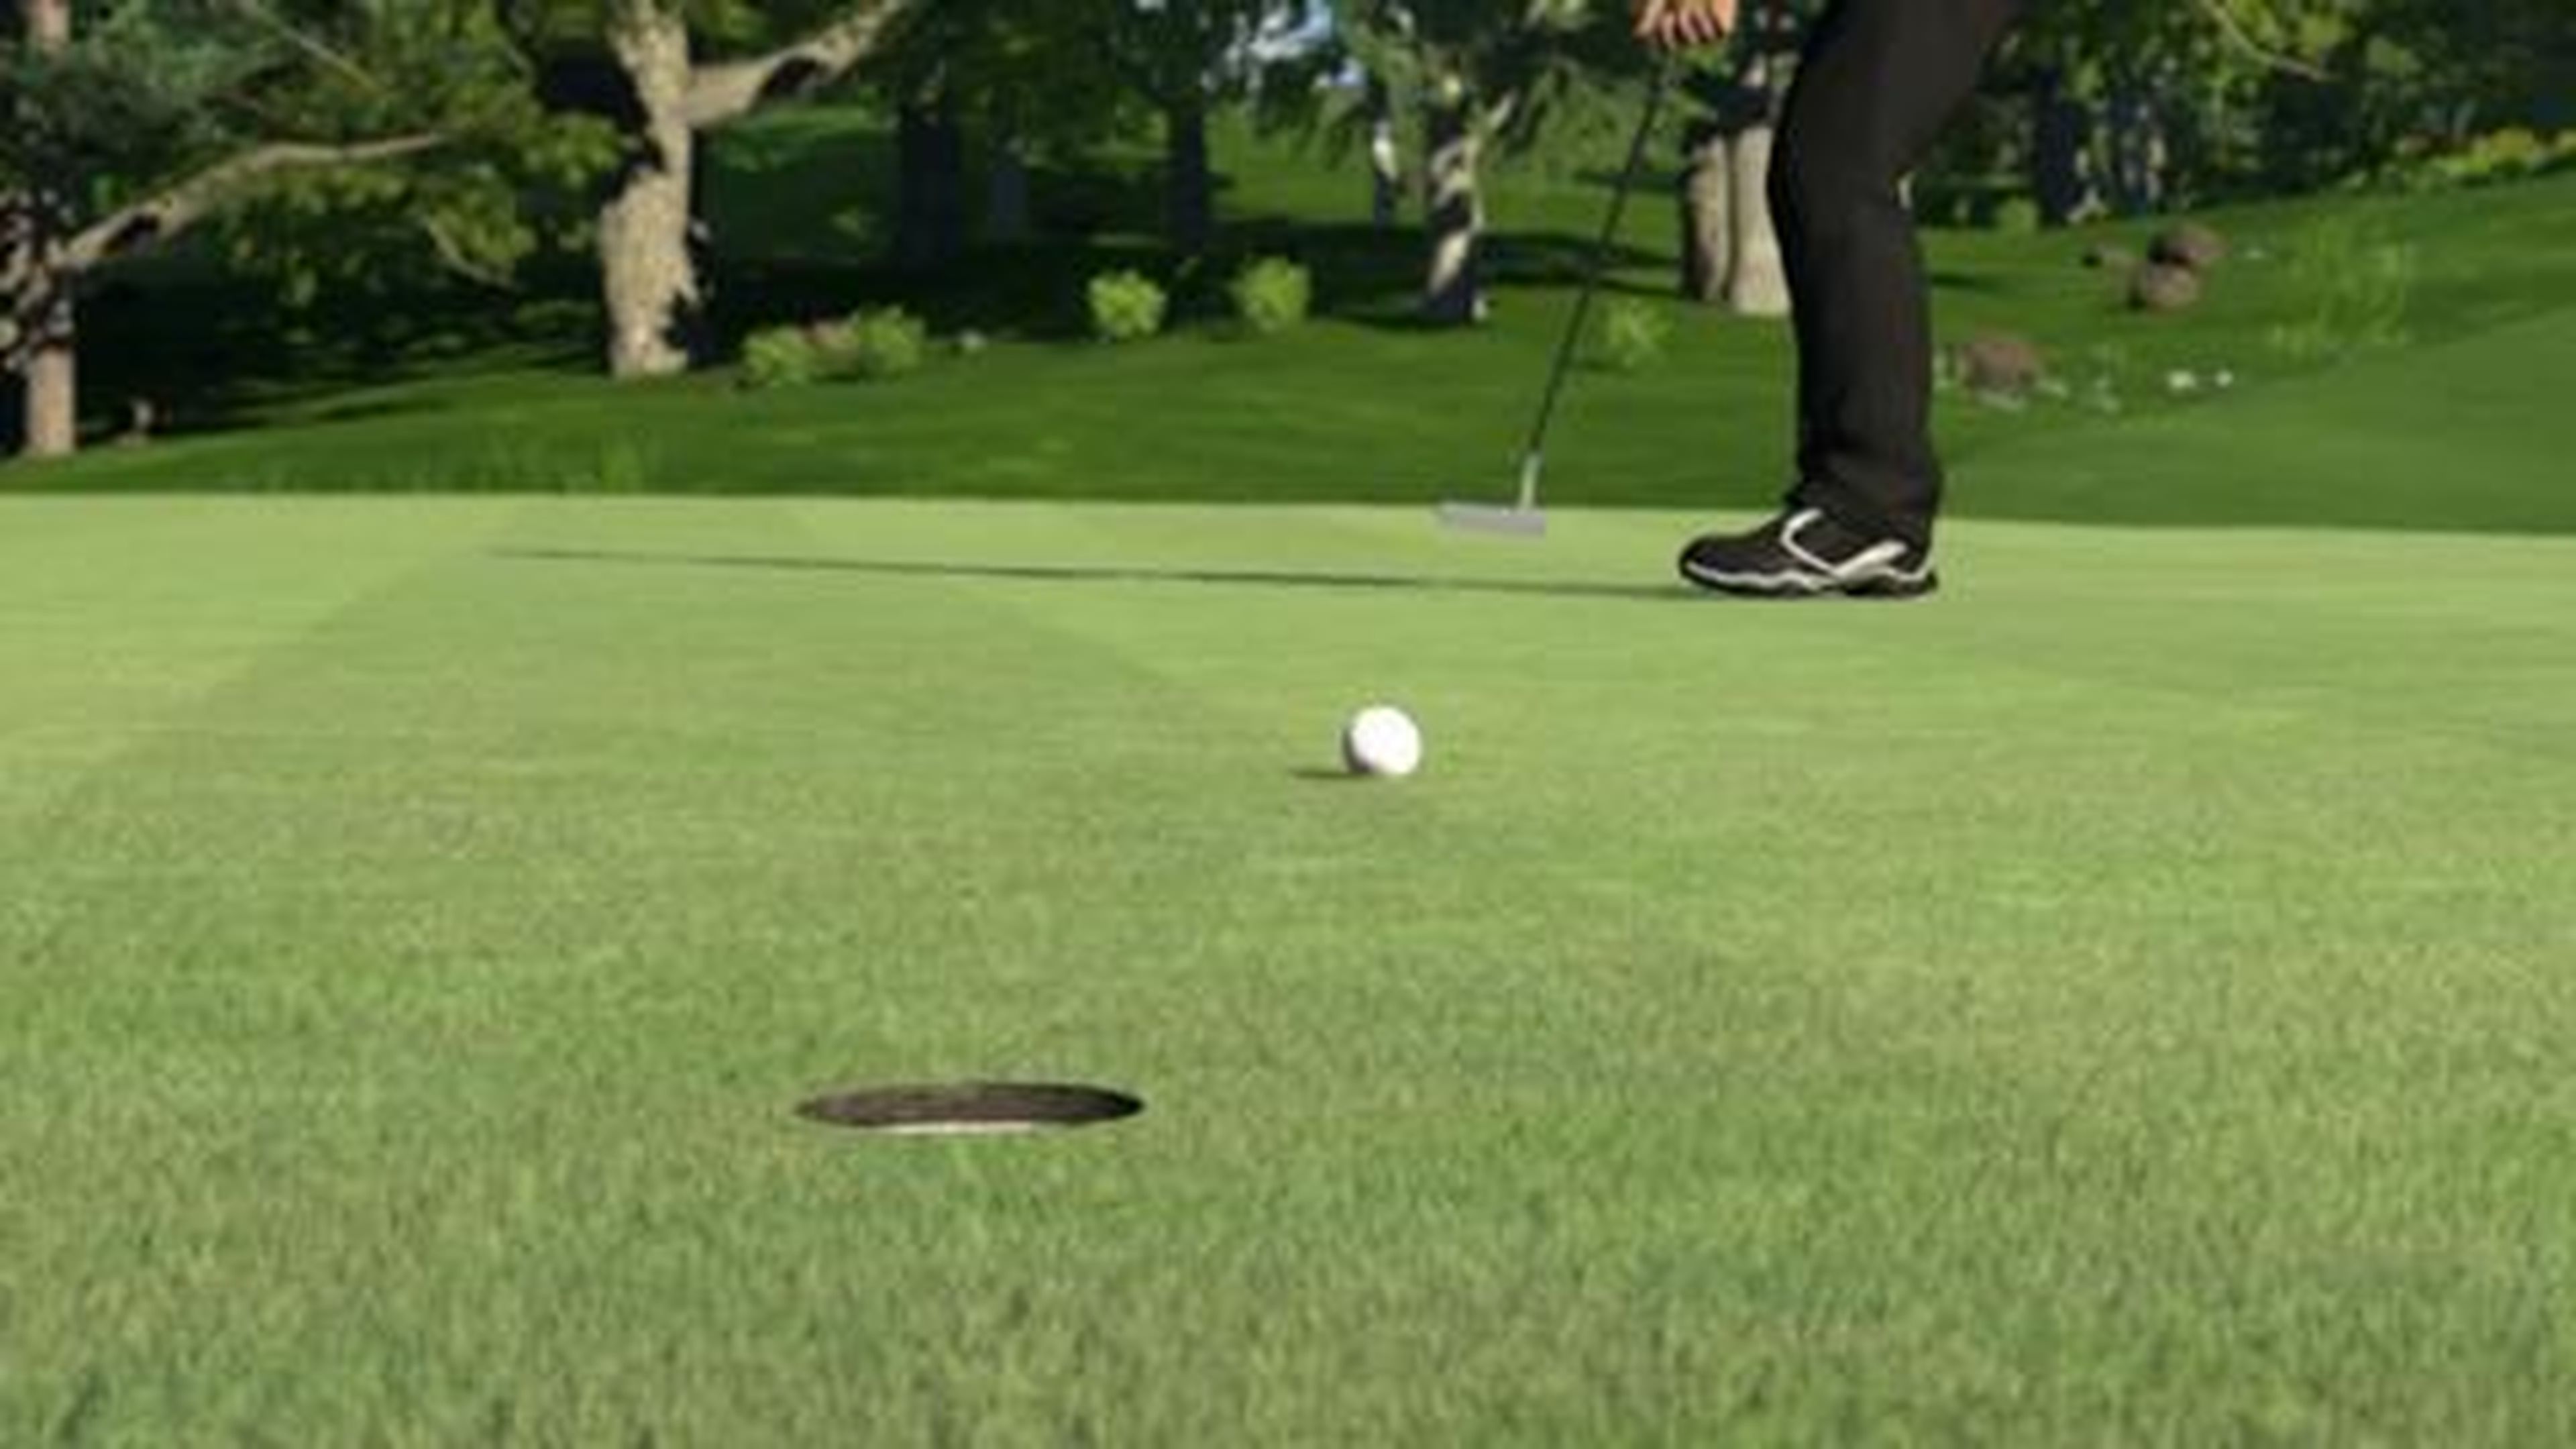 The Golf Club Trailer (PS4)